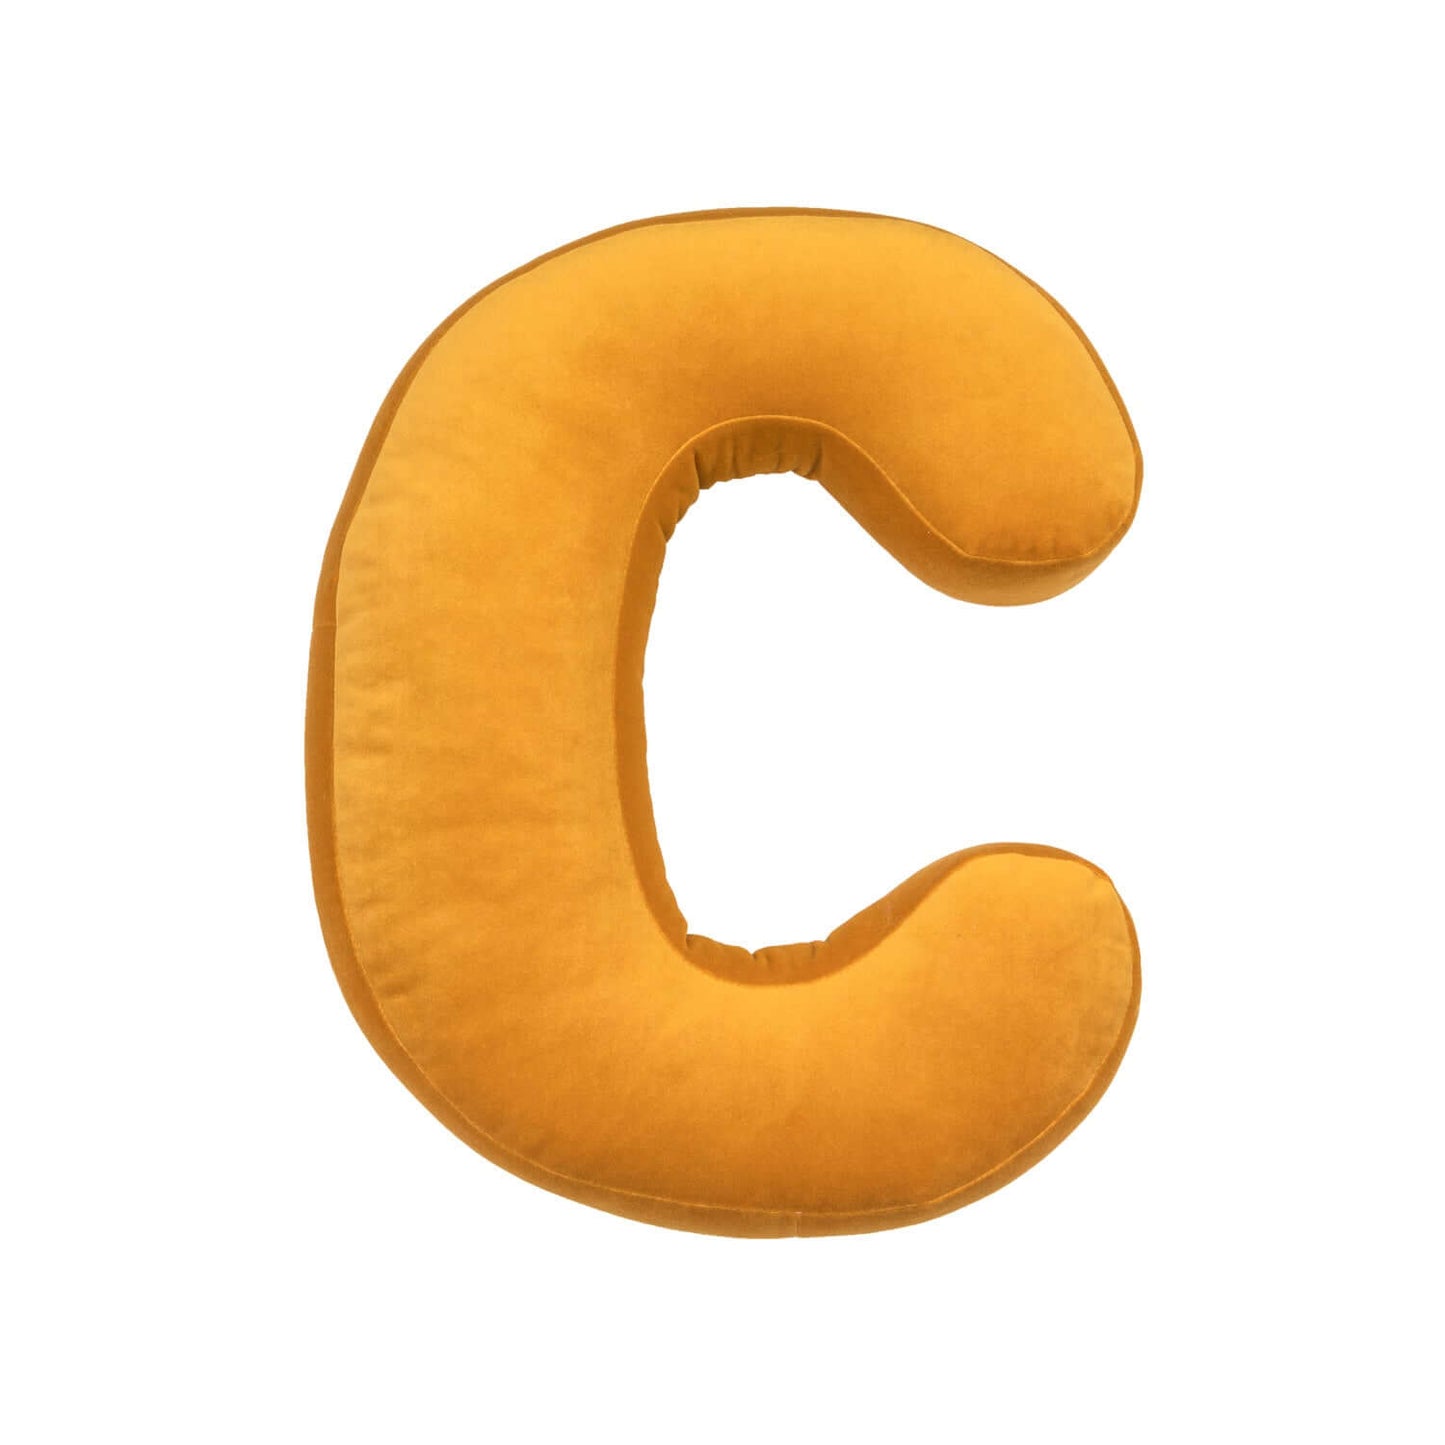 Velvet letter cushion C in yellow by bettys home 